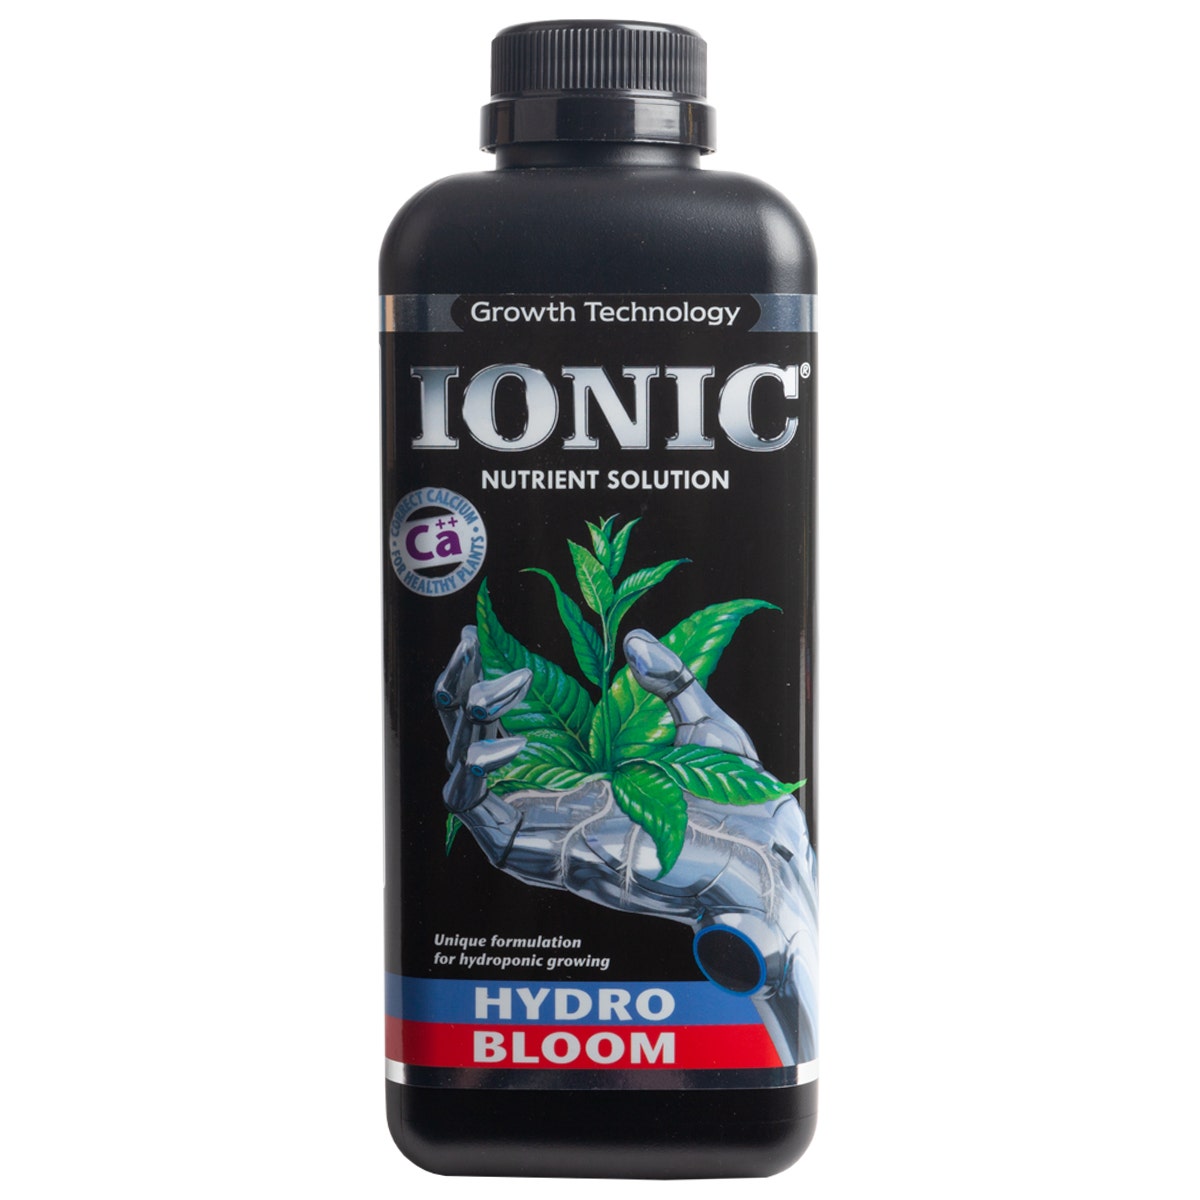 Ionic Hydro Bloom